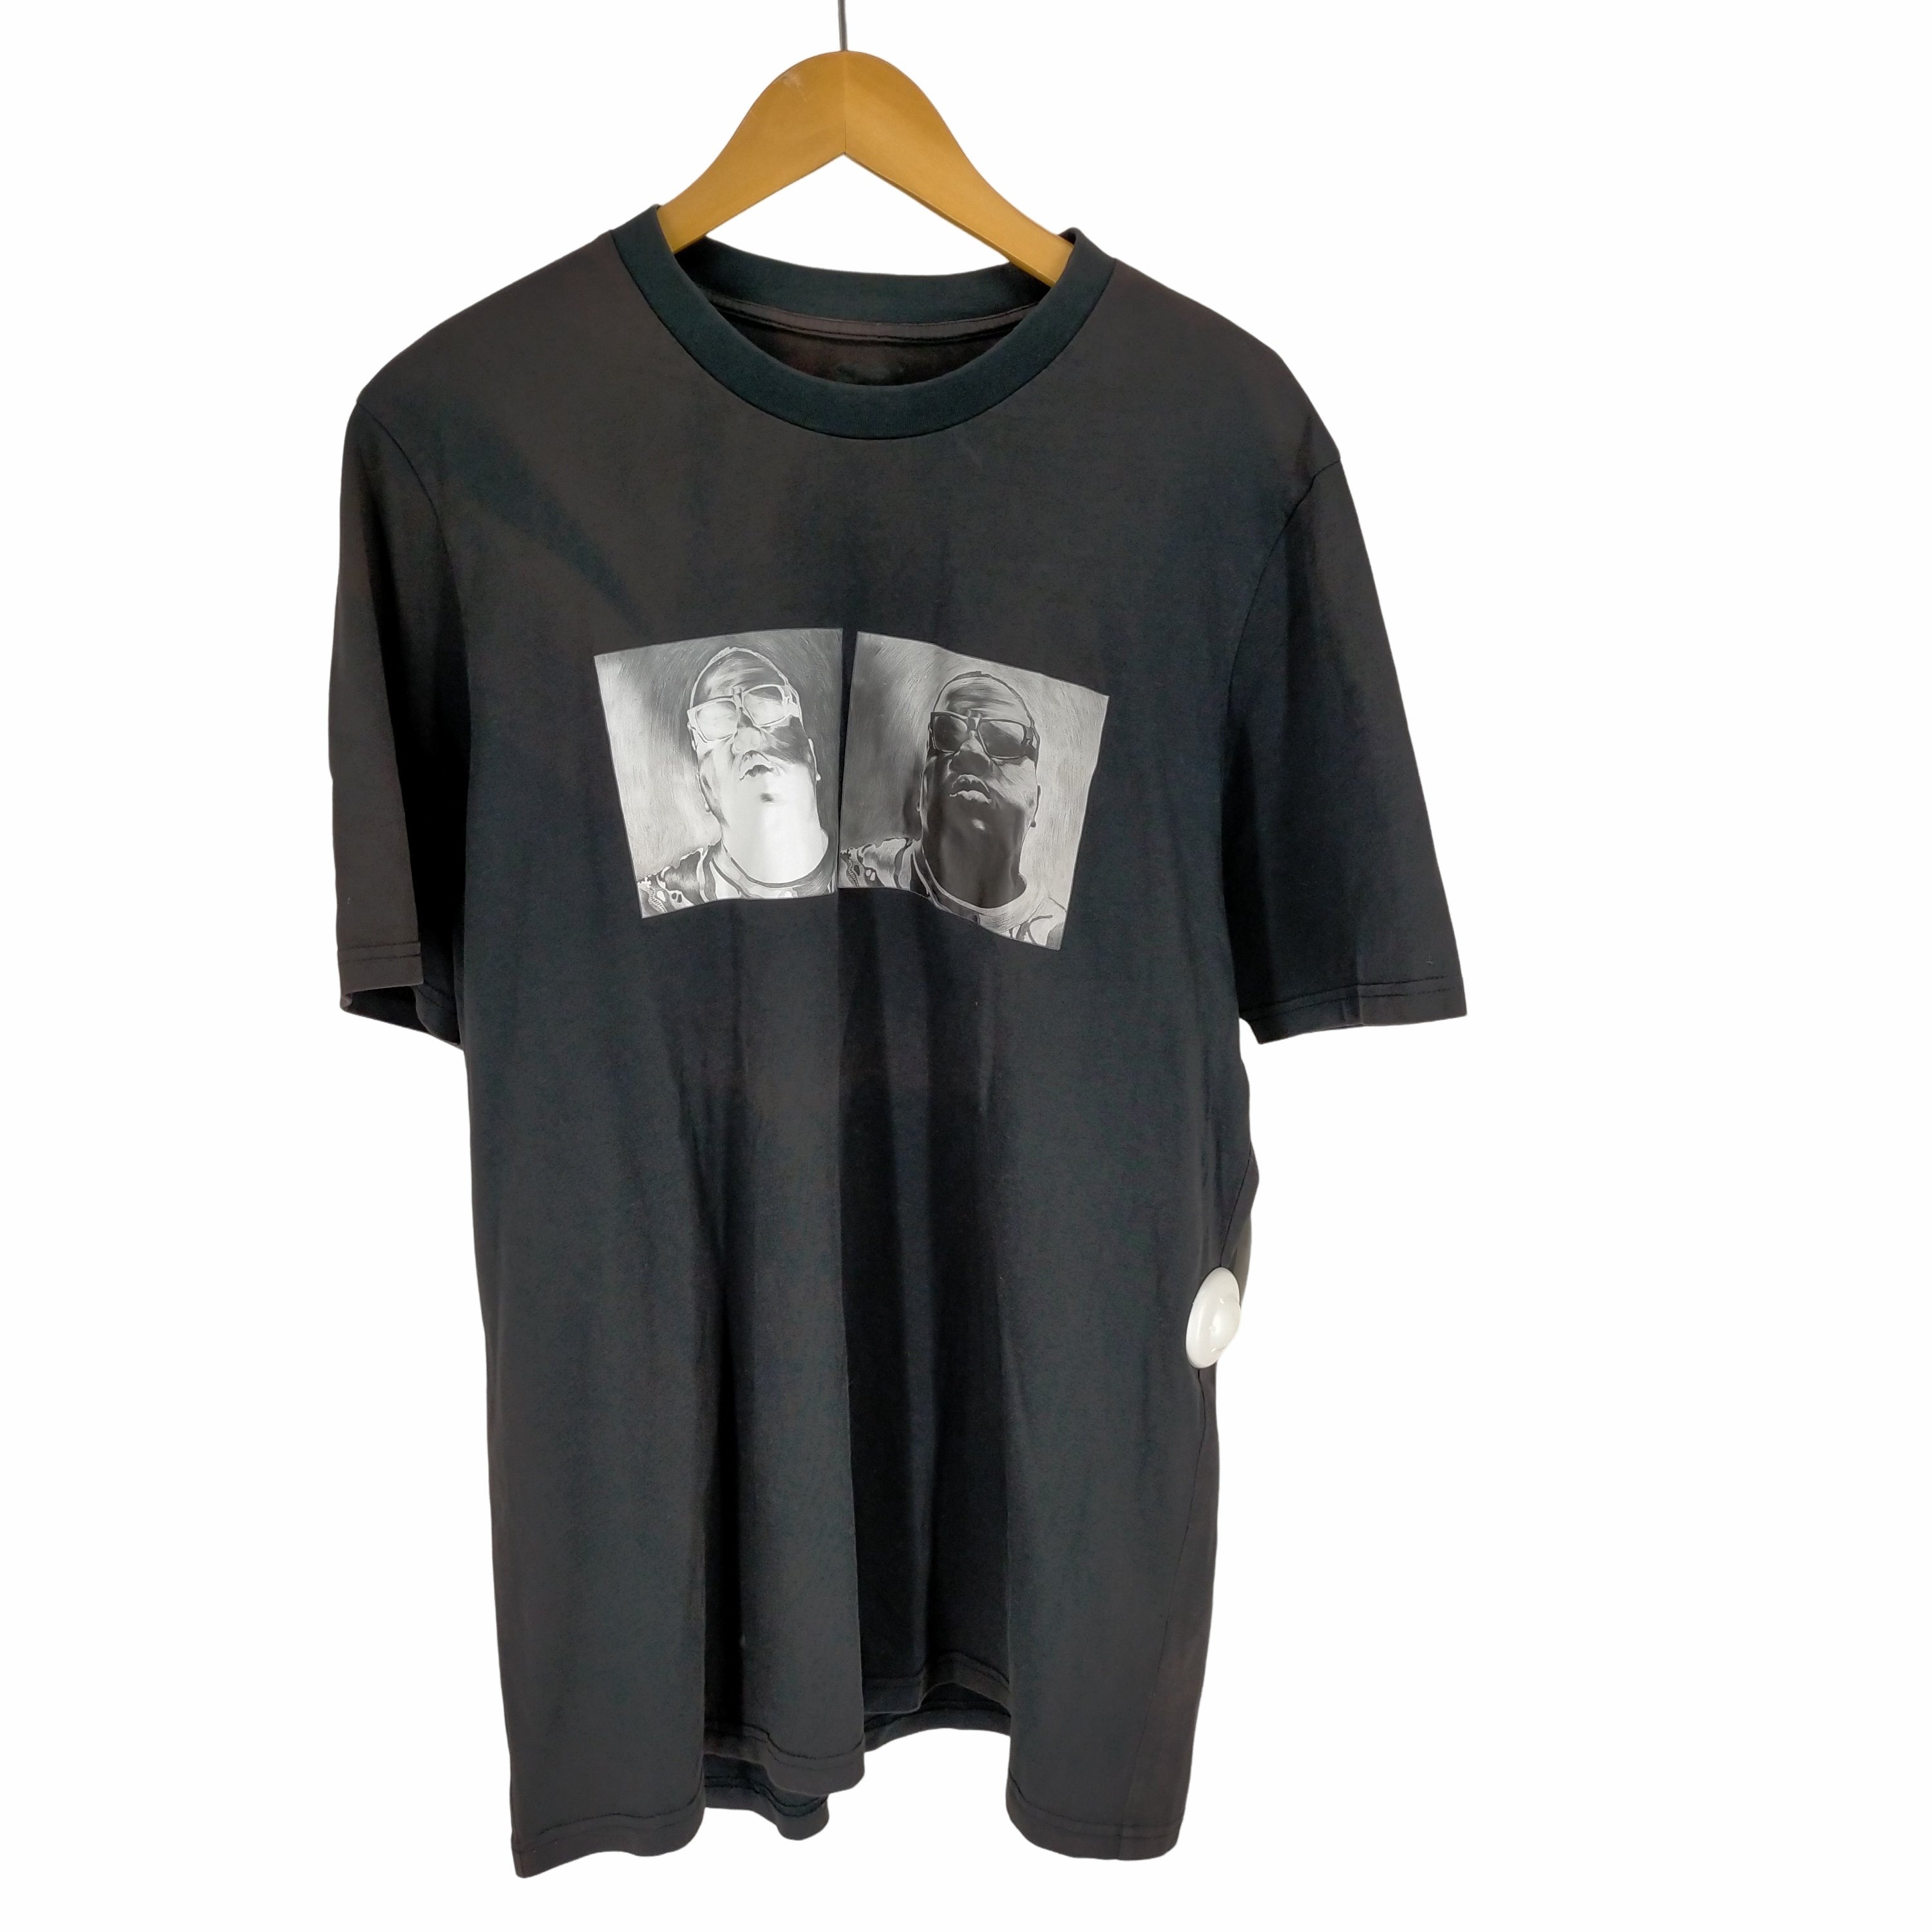 Tシャツ/カットソー(半袖/袖なし)OAMC Logo Spray Tシャツ ロゴスプレー ブラック M